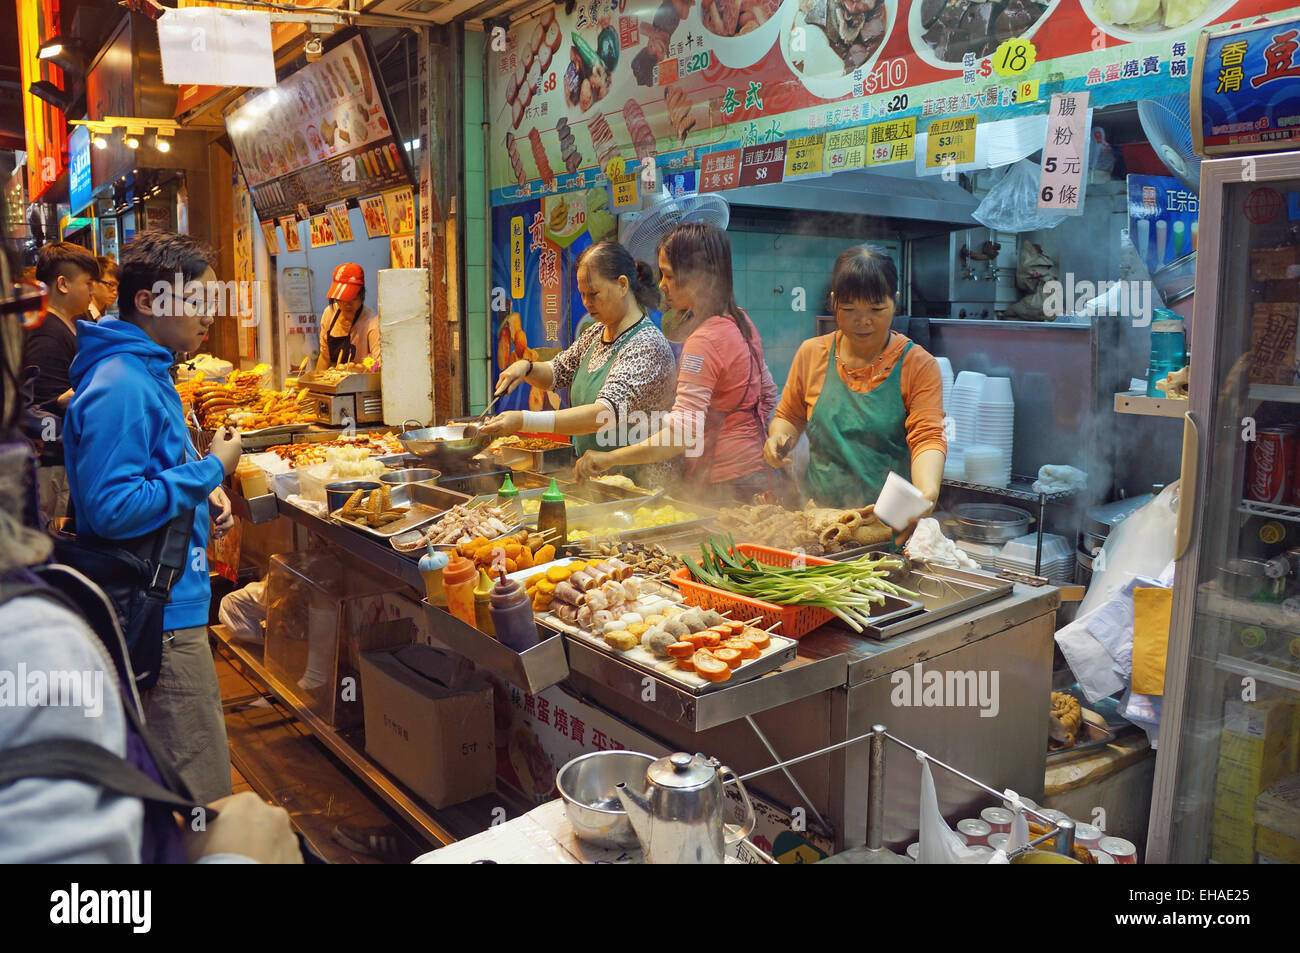 Un étal vendant des aliments de rue à Hong Kong Banque D'Images